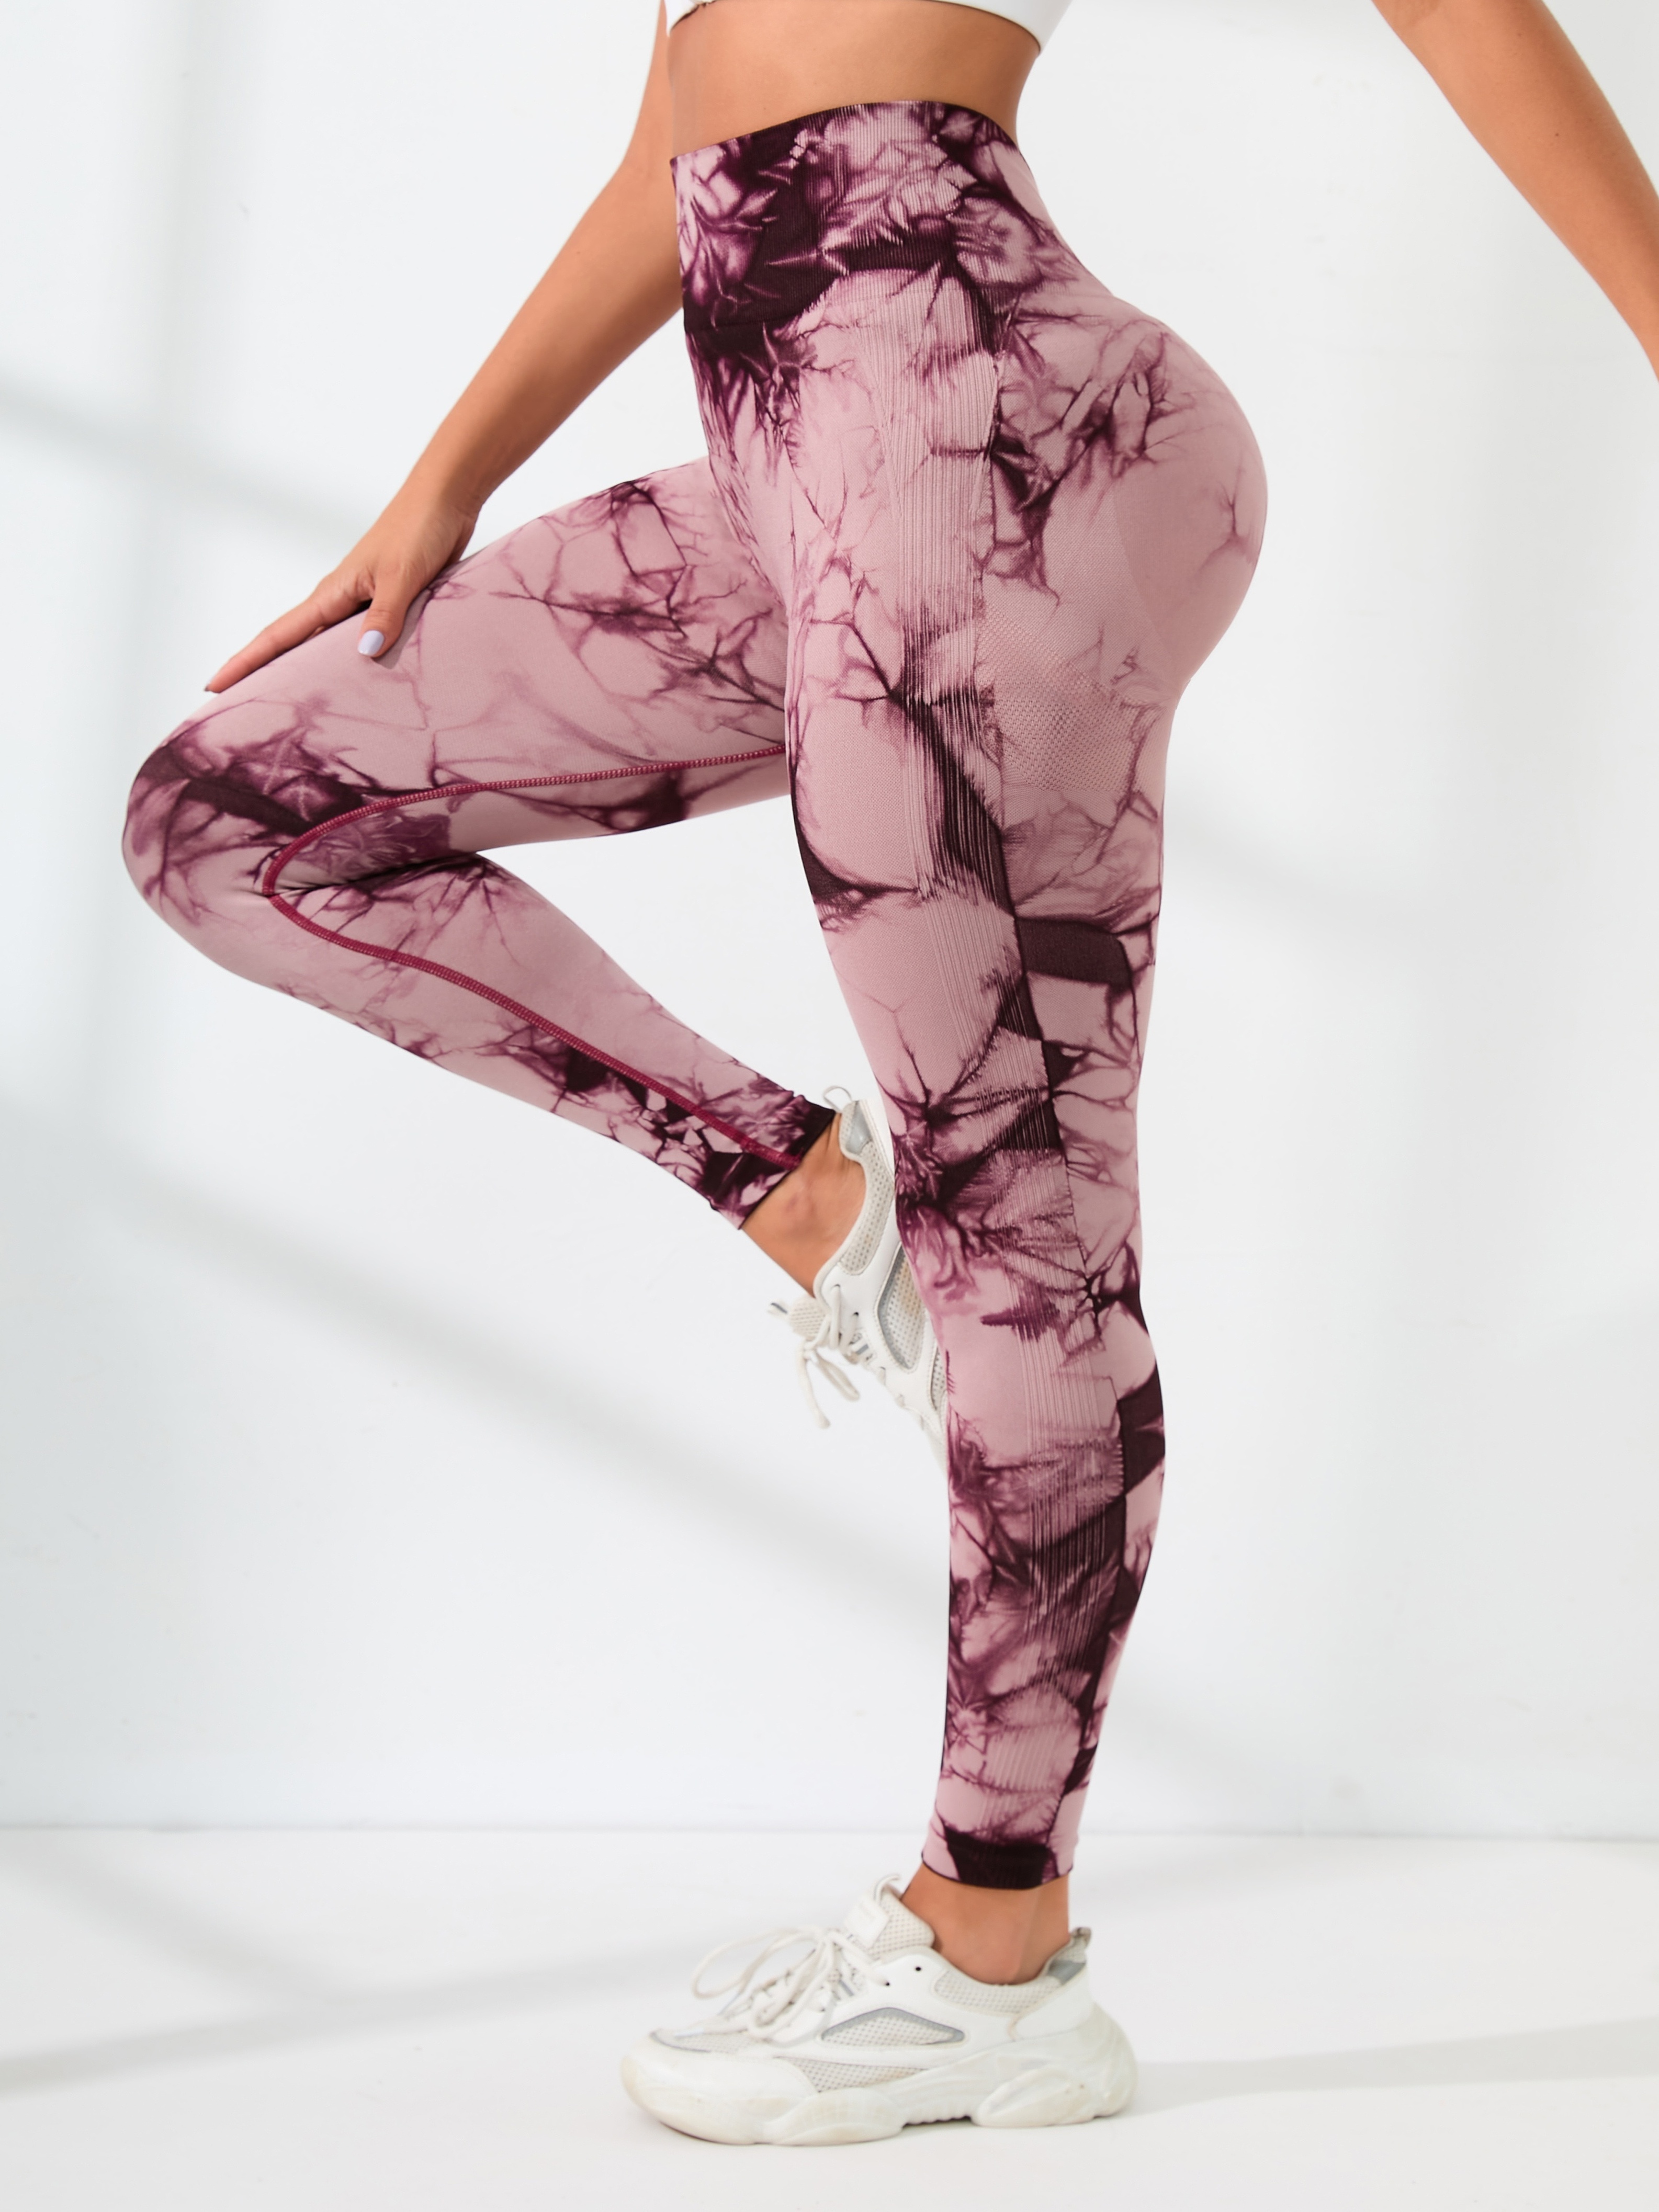 YWDJ Workout Leggings for Women Women Ink Yoga Tie-Dye Pants Slim And Hip  Lifting Exercise Bottom Pants Pink M